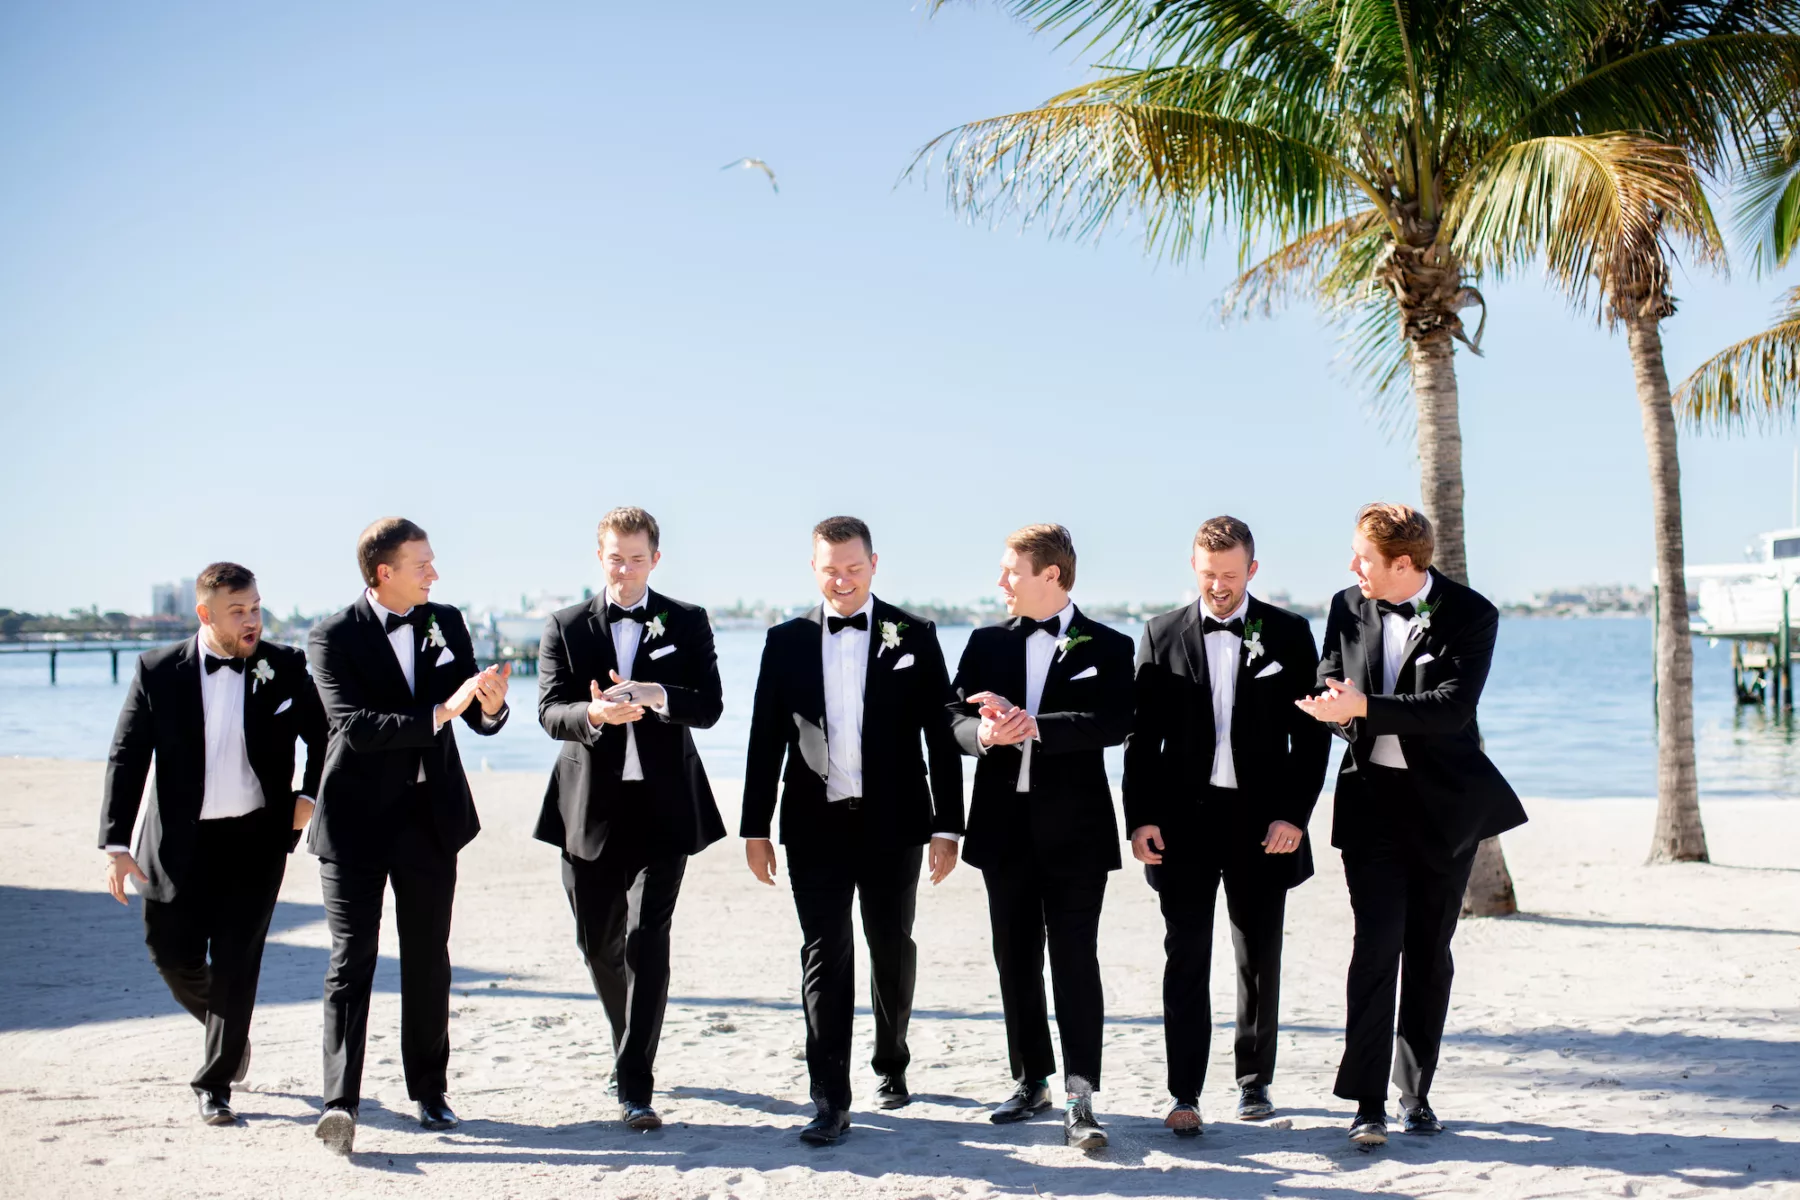 Black Suit and Bowtie Groomsmen Beach Wedding Attire Ideas